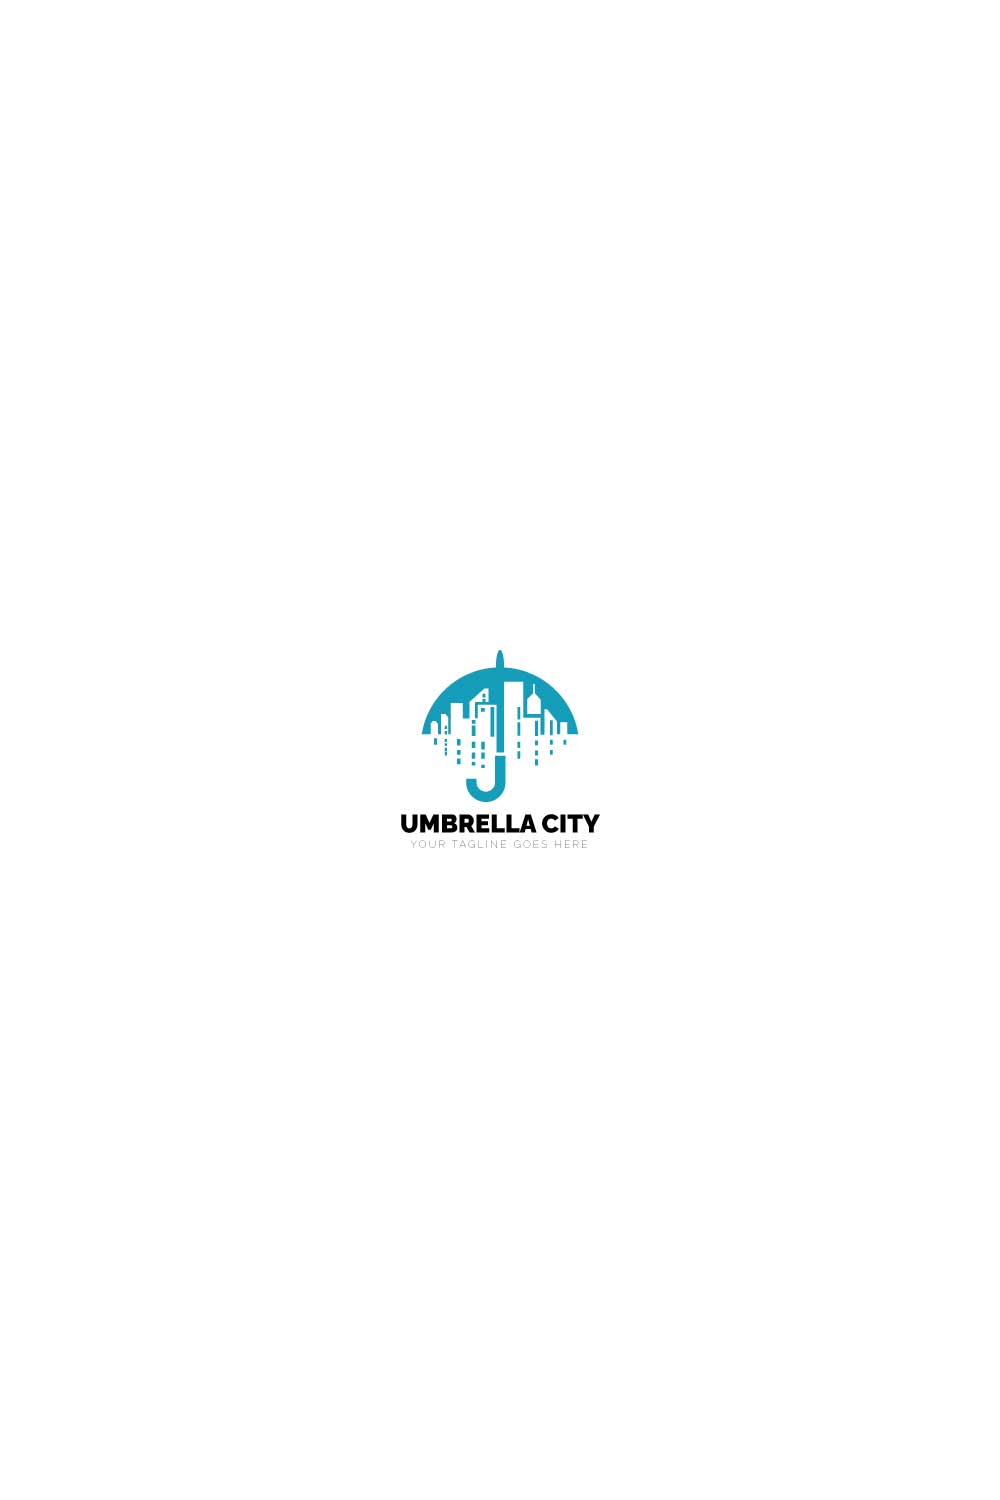 Initial City umbrella logo design pinterest preview image.